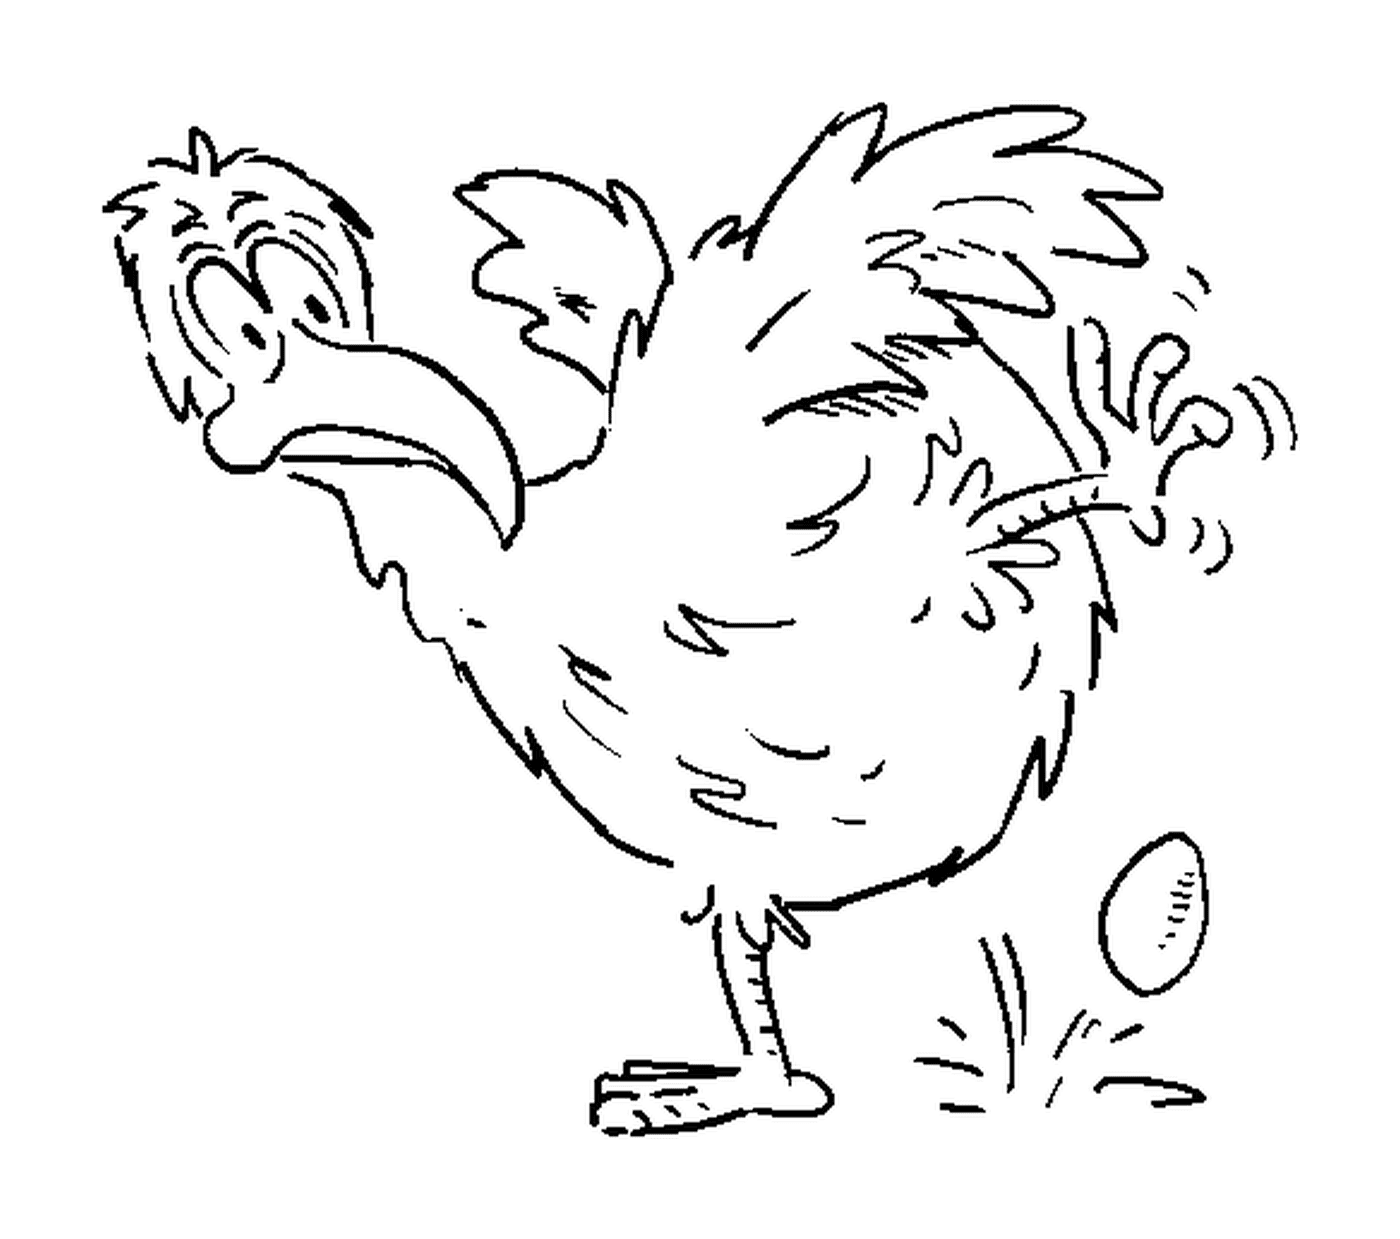  Egg laying chicken 